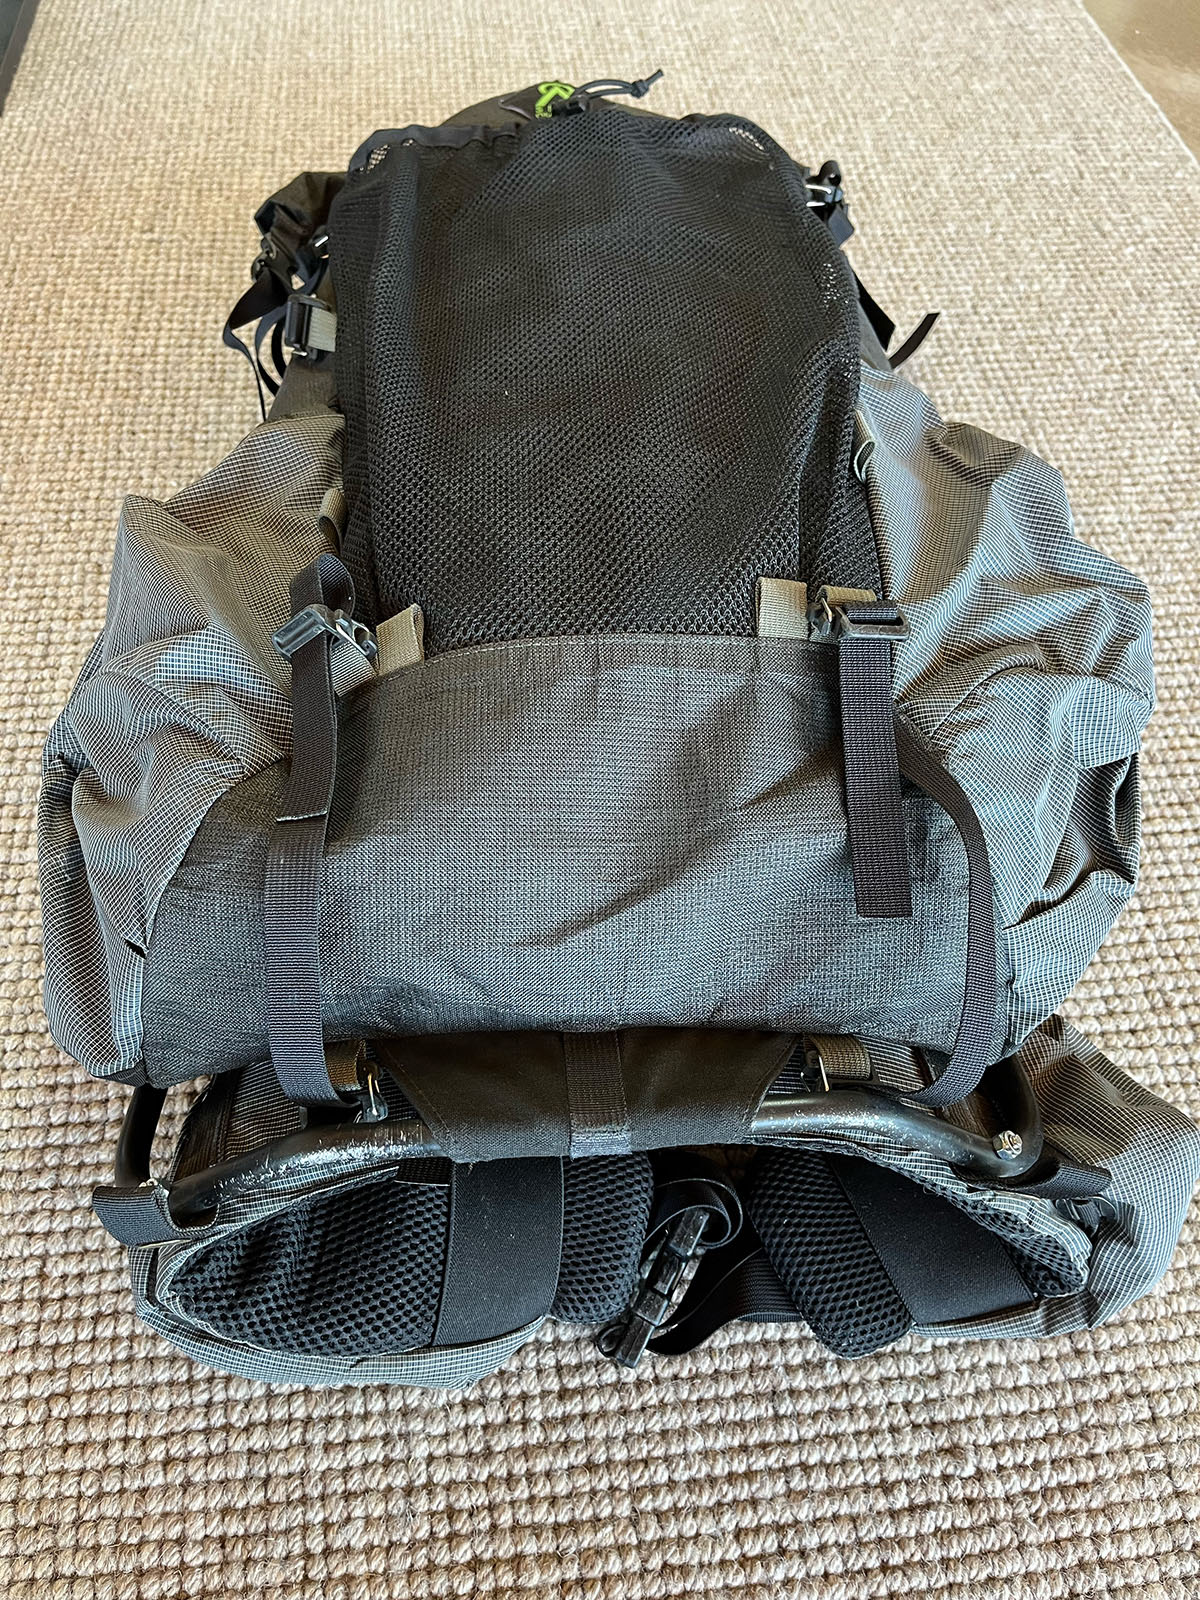 SOLD *** Seek Outside Gila Ultra 400 backpack - Backpacking Light